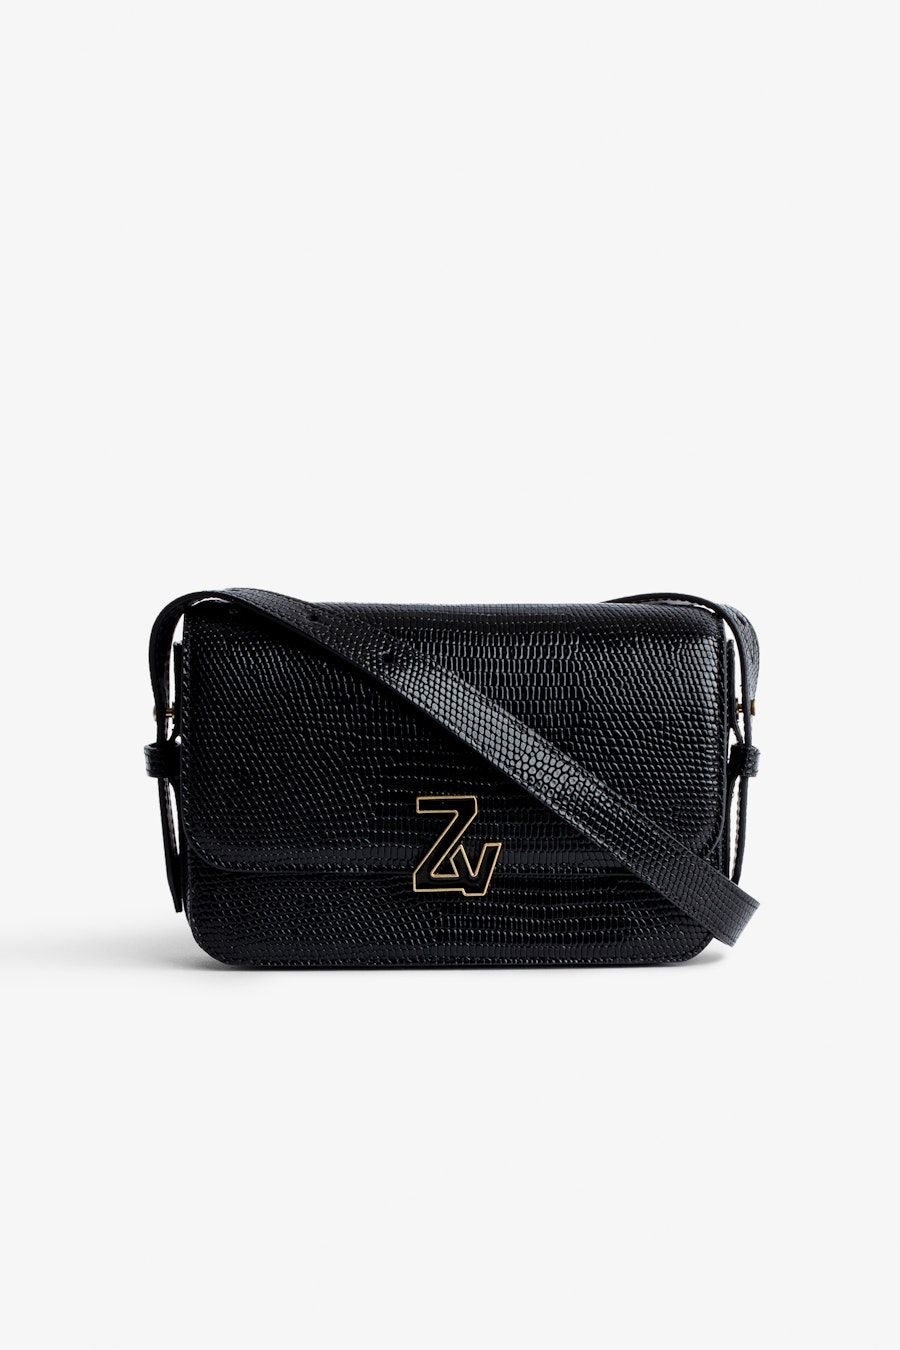 ZADIG&VOLTAIRE Le Mini ZV Initiale Bag